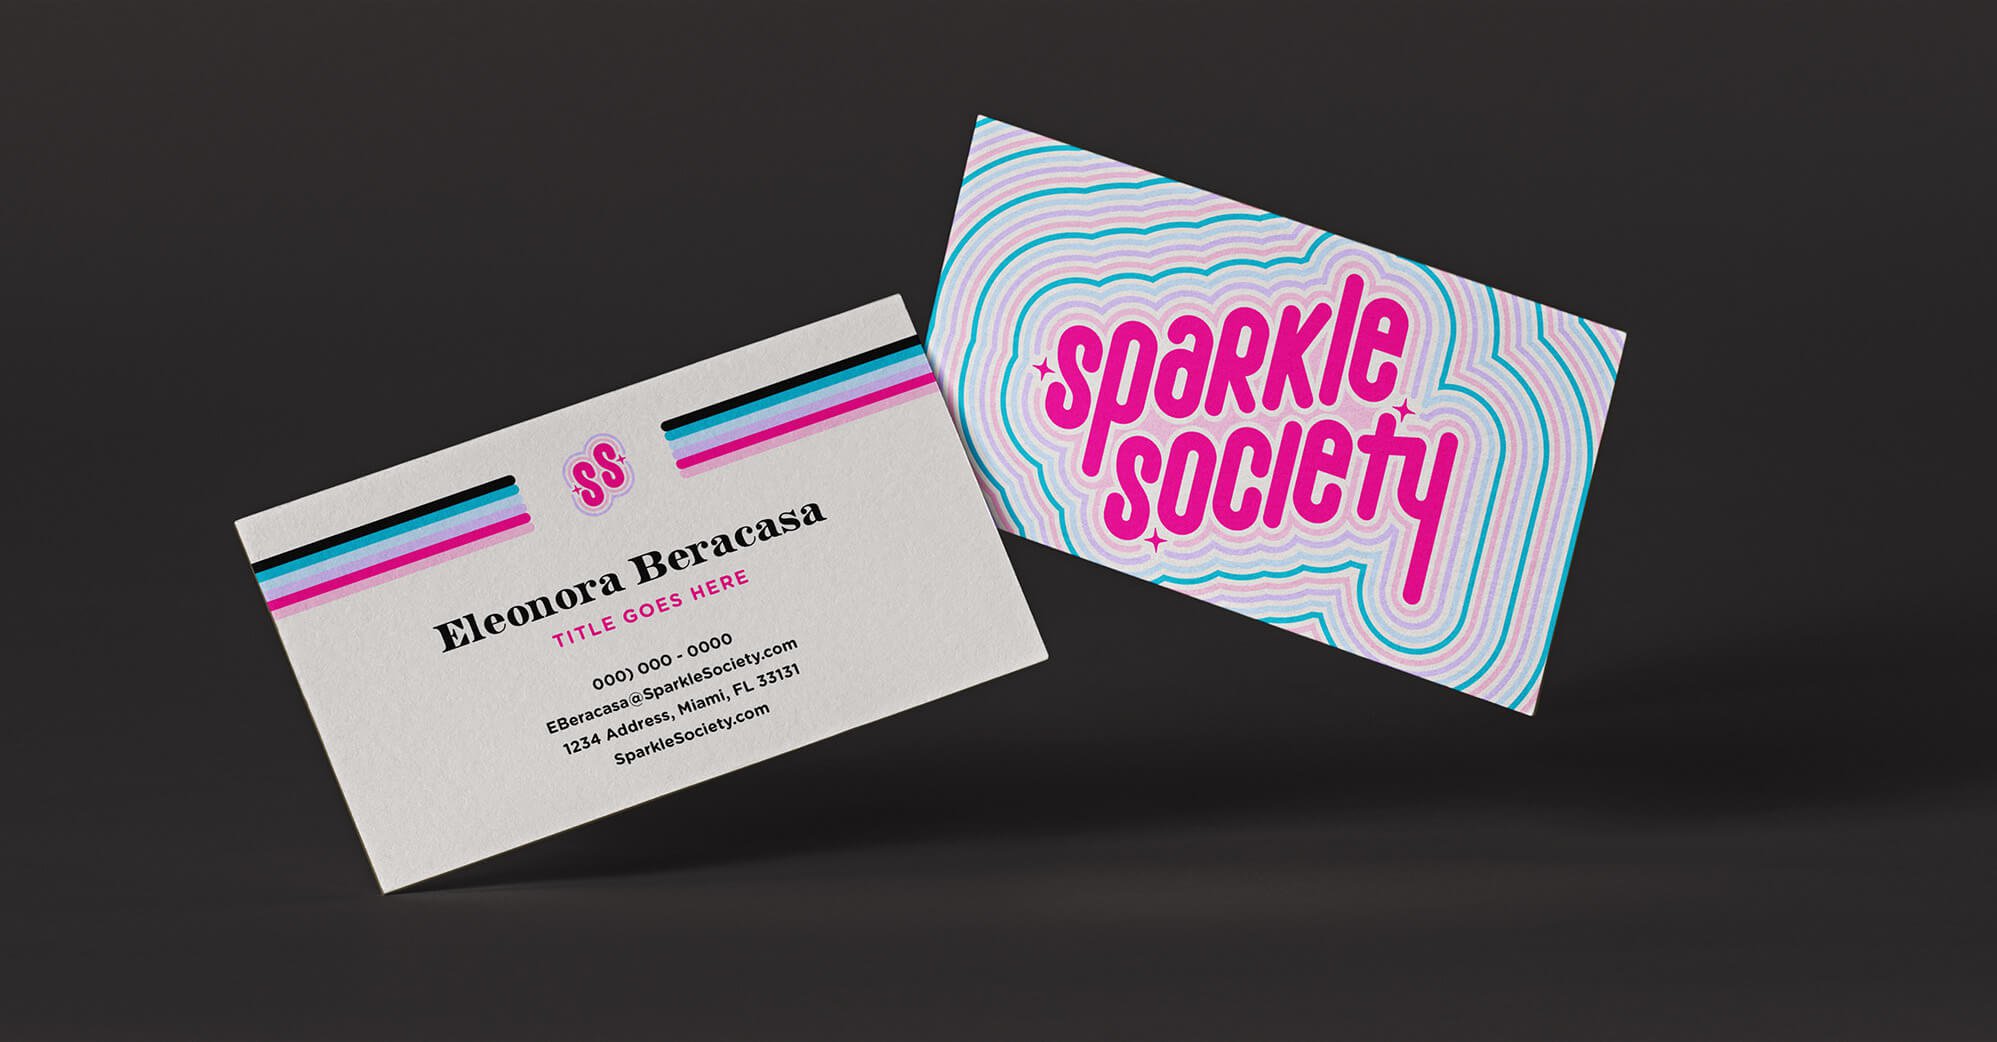 Sparkle Society Case Study - Business Cards